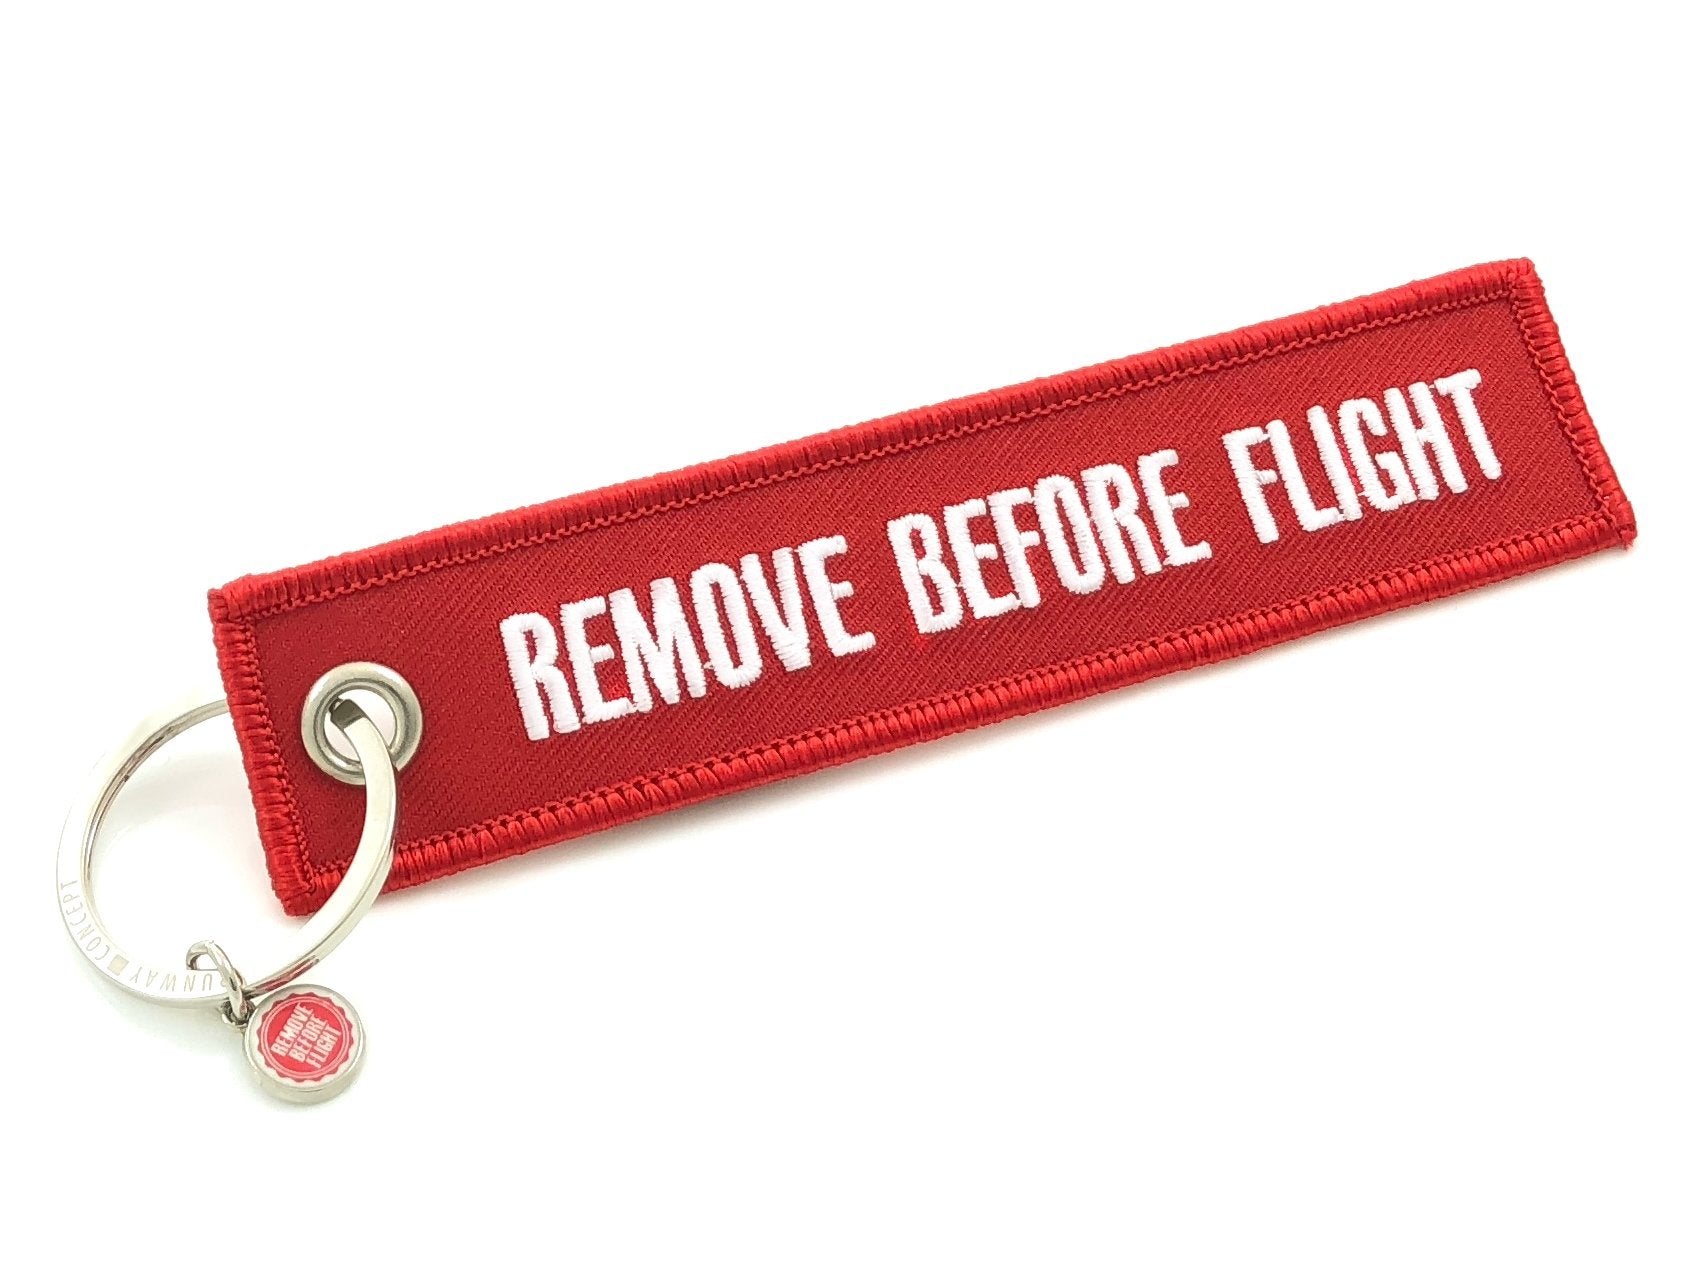 "Remove Before Flight" Schlüsselanhänger - 25center.com